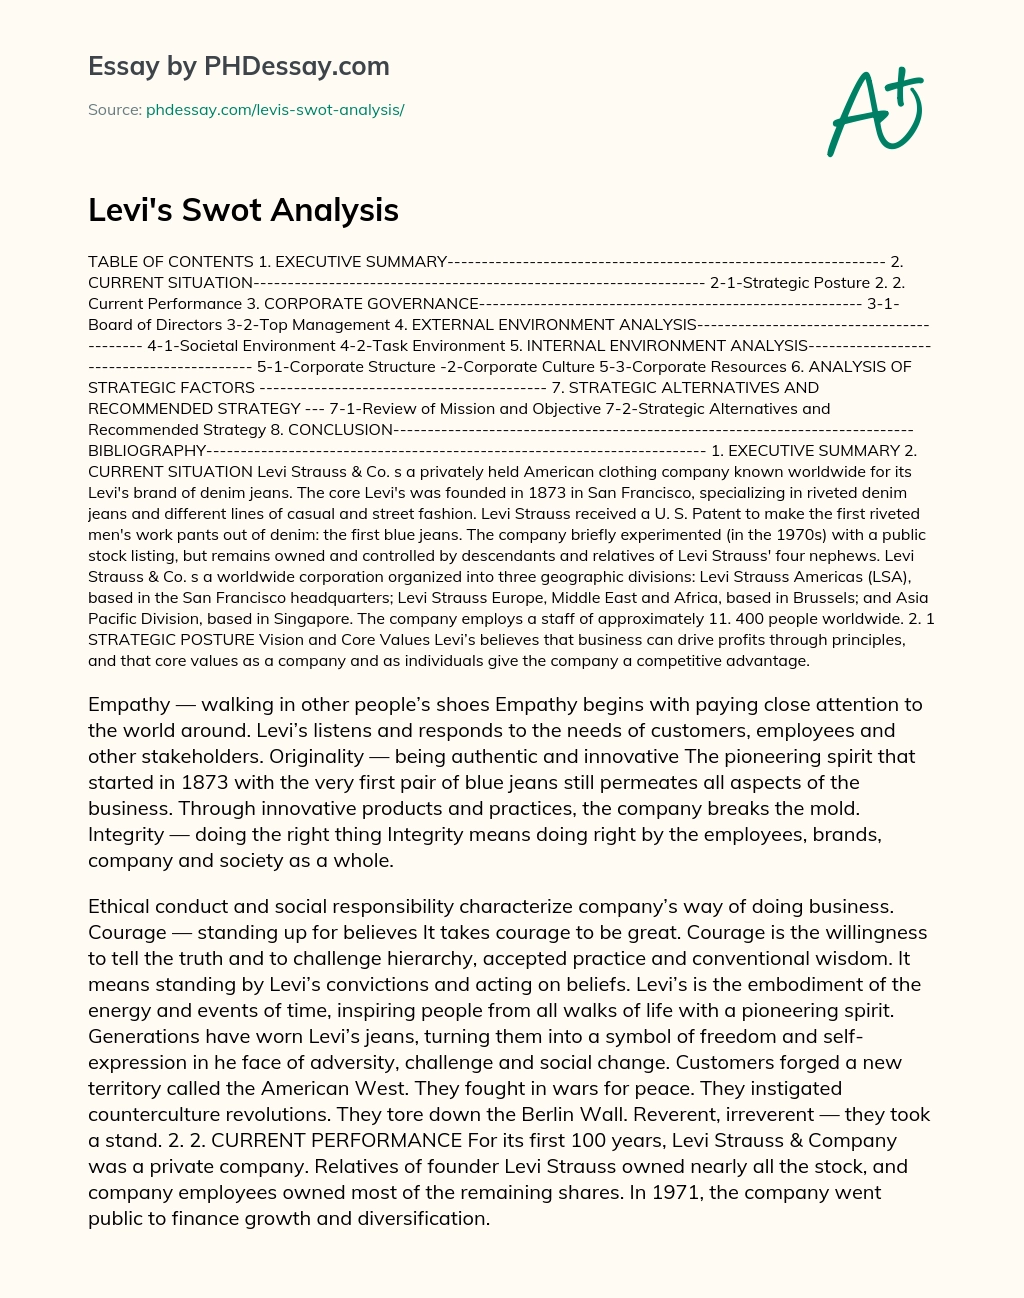 Levi’s Swot Analysis essay